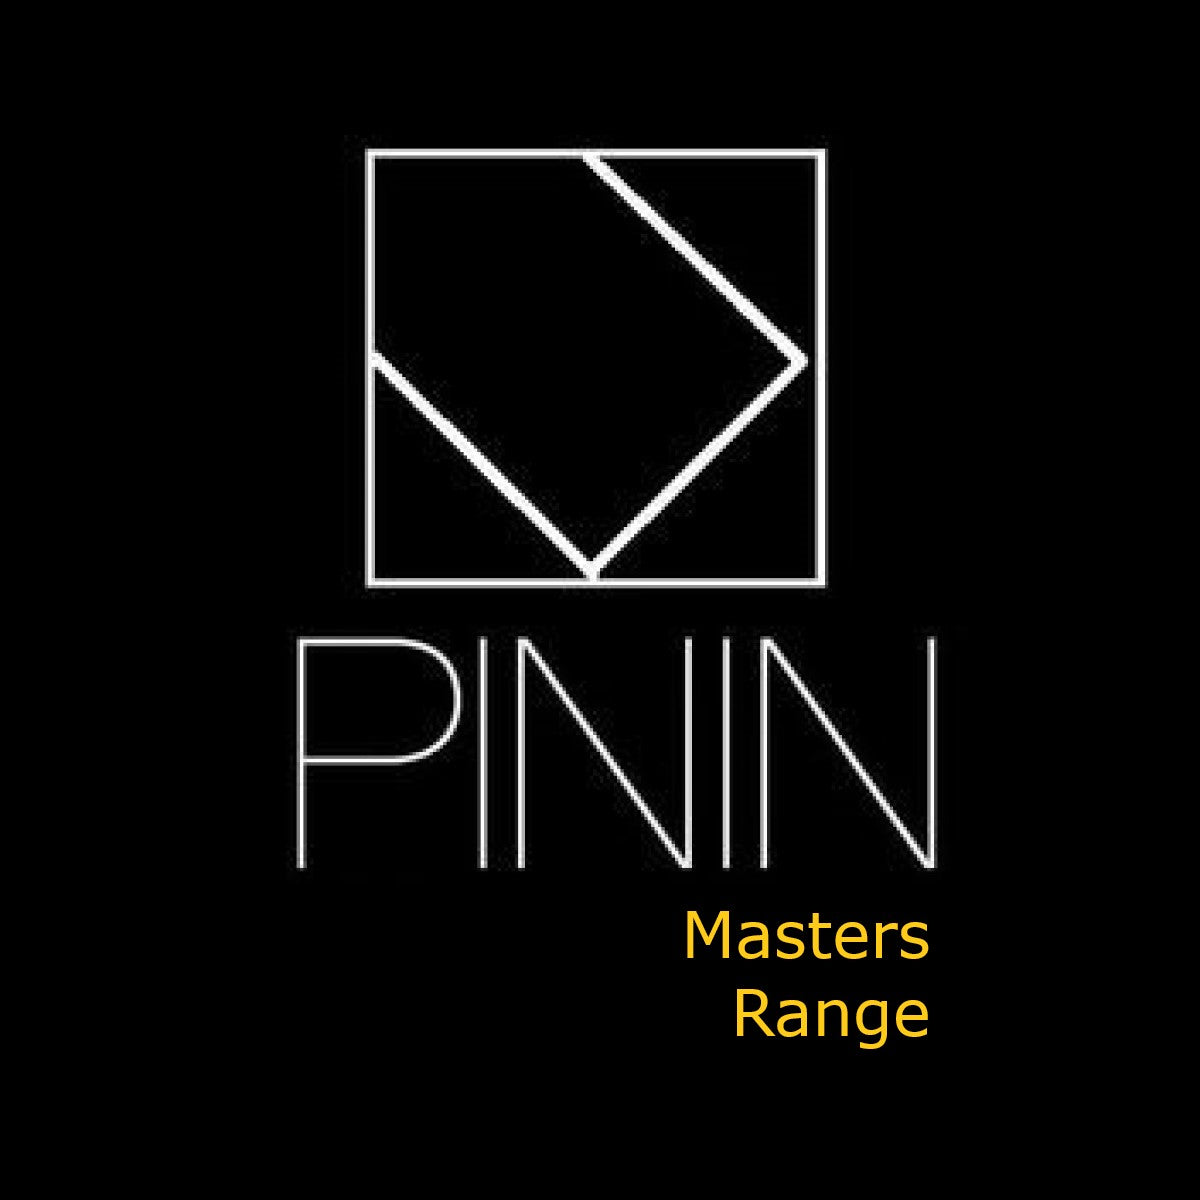 Pinin Masters Range